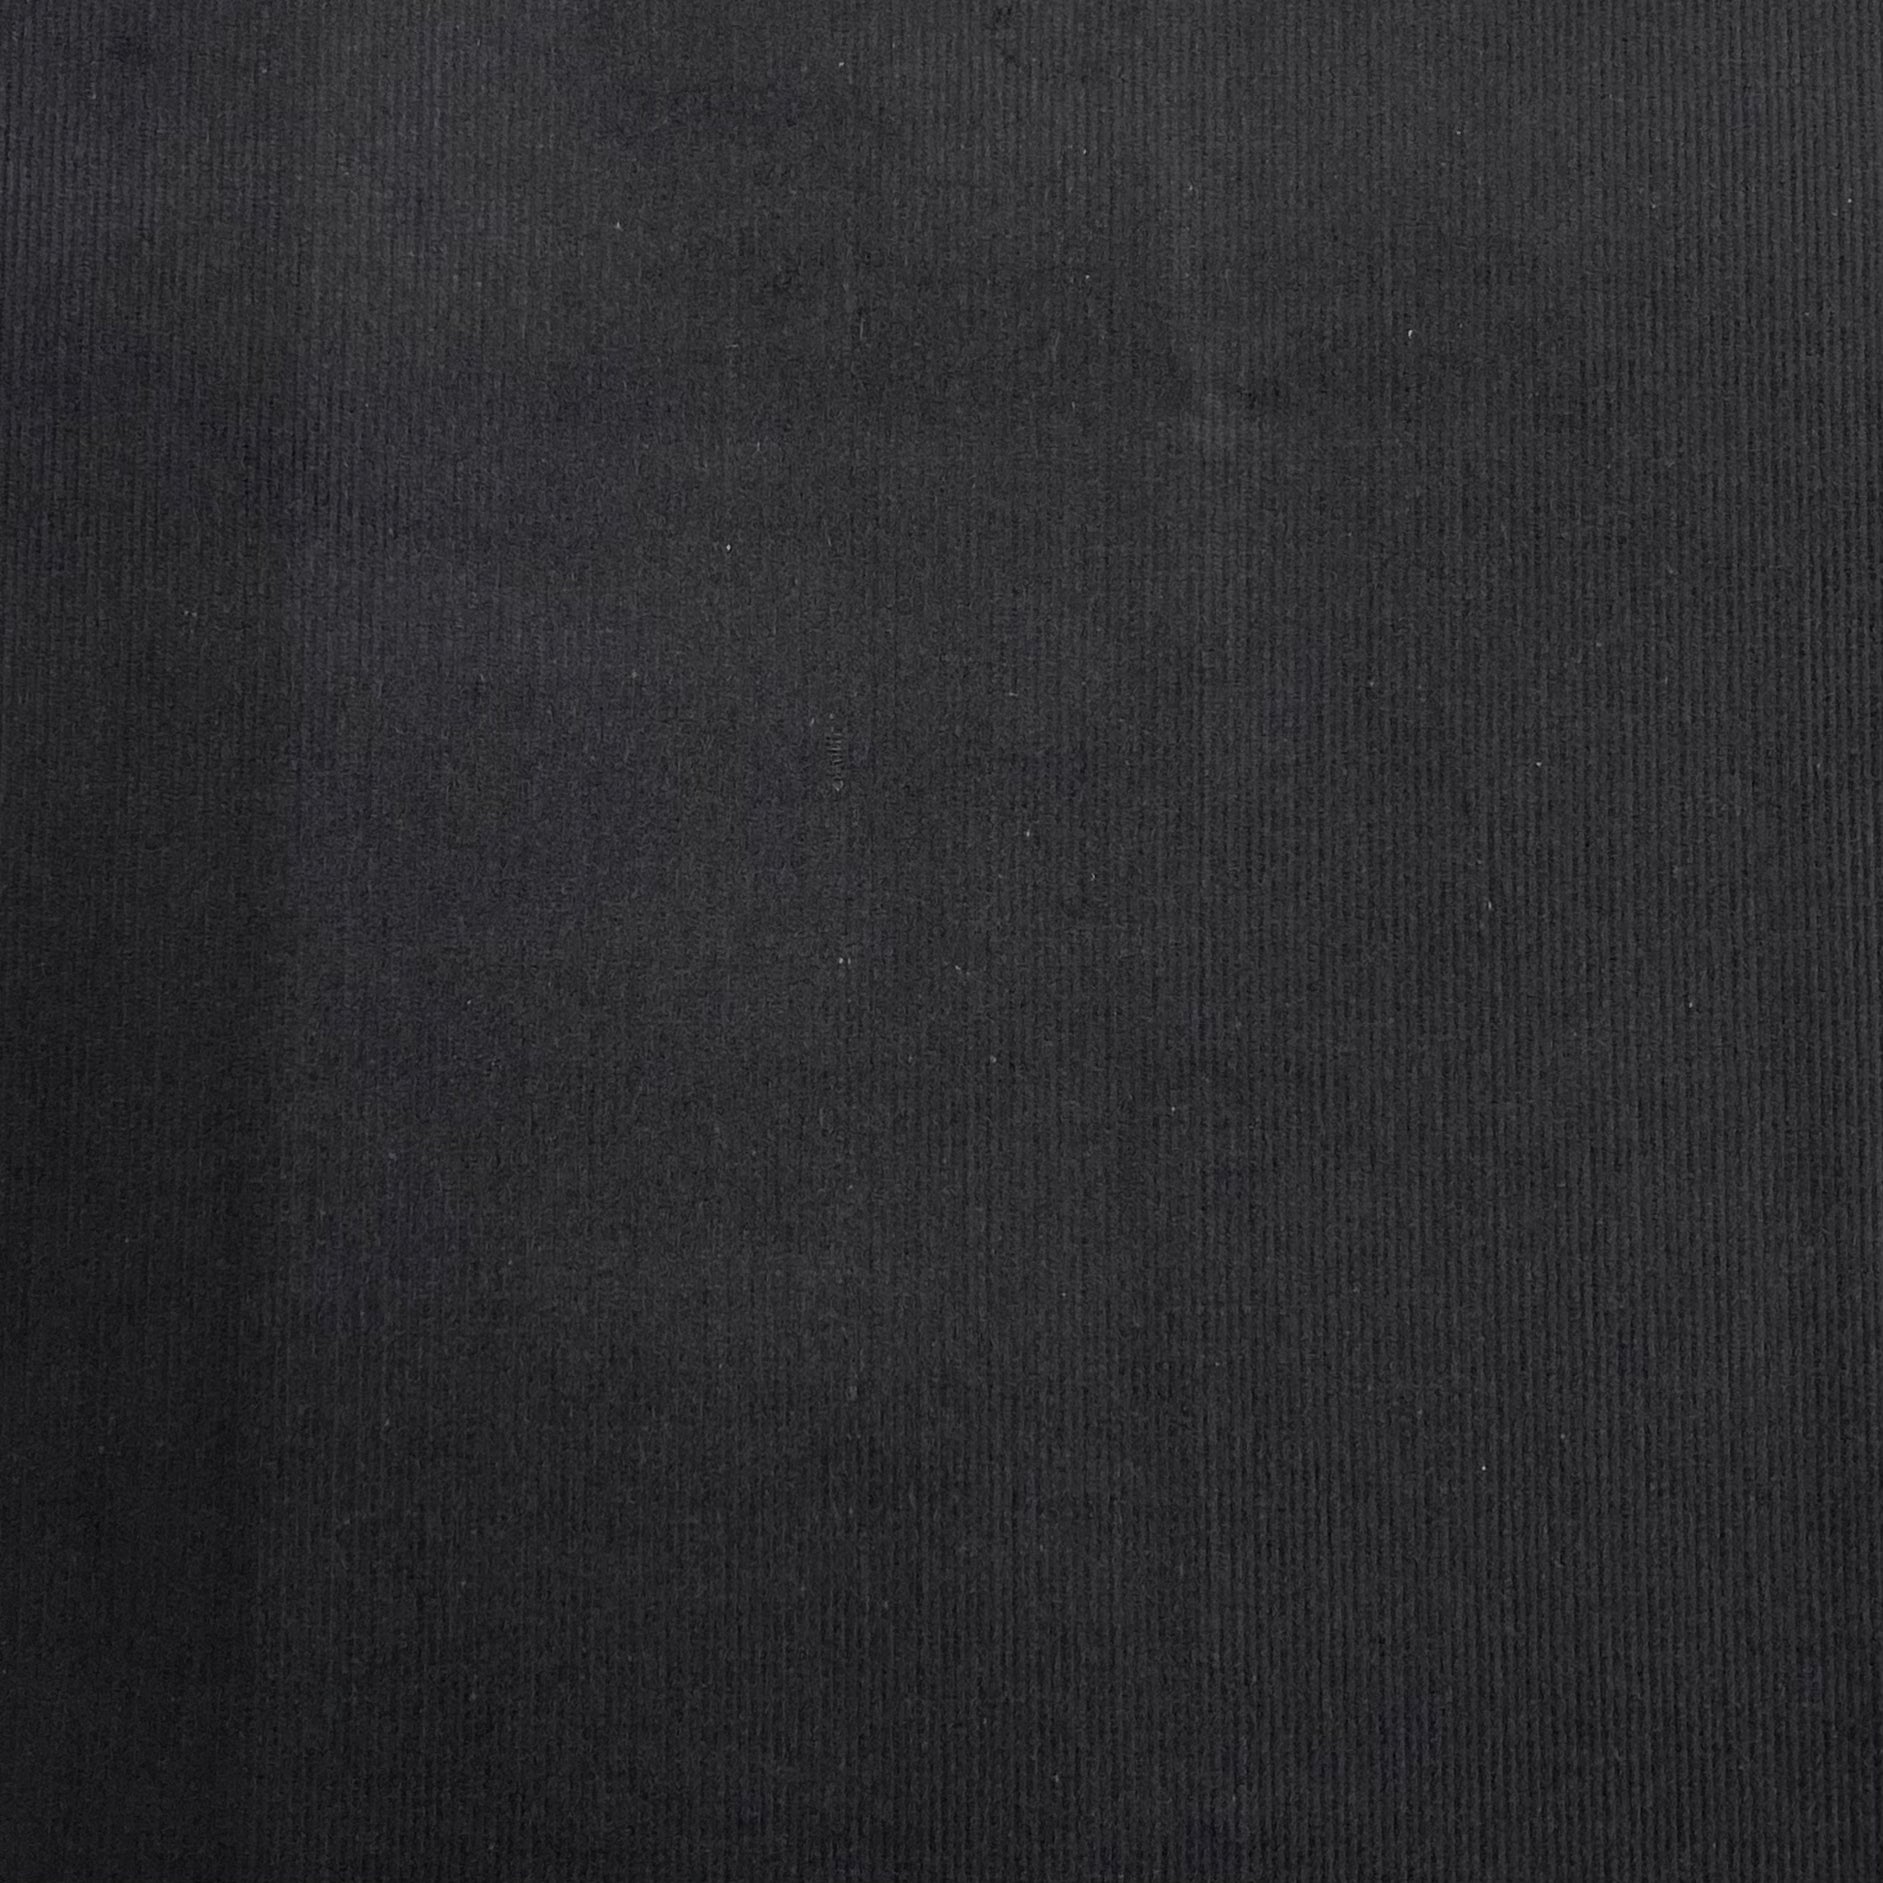 Black Stretch Needlecord Fabric